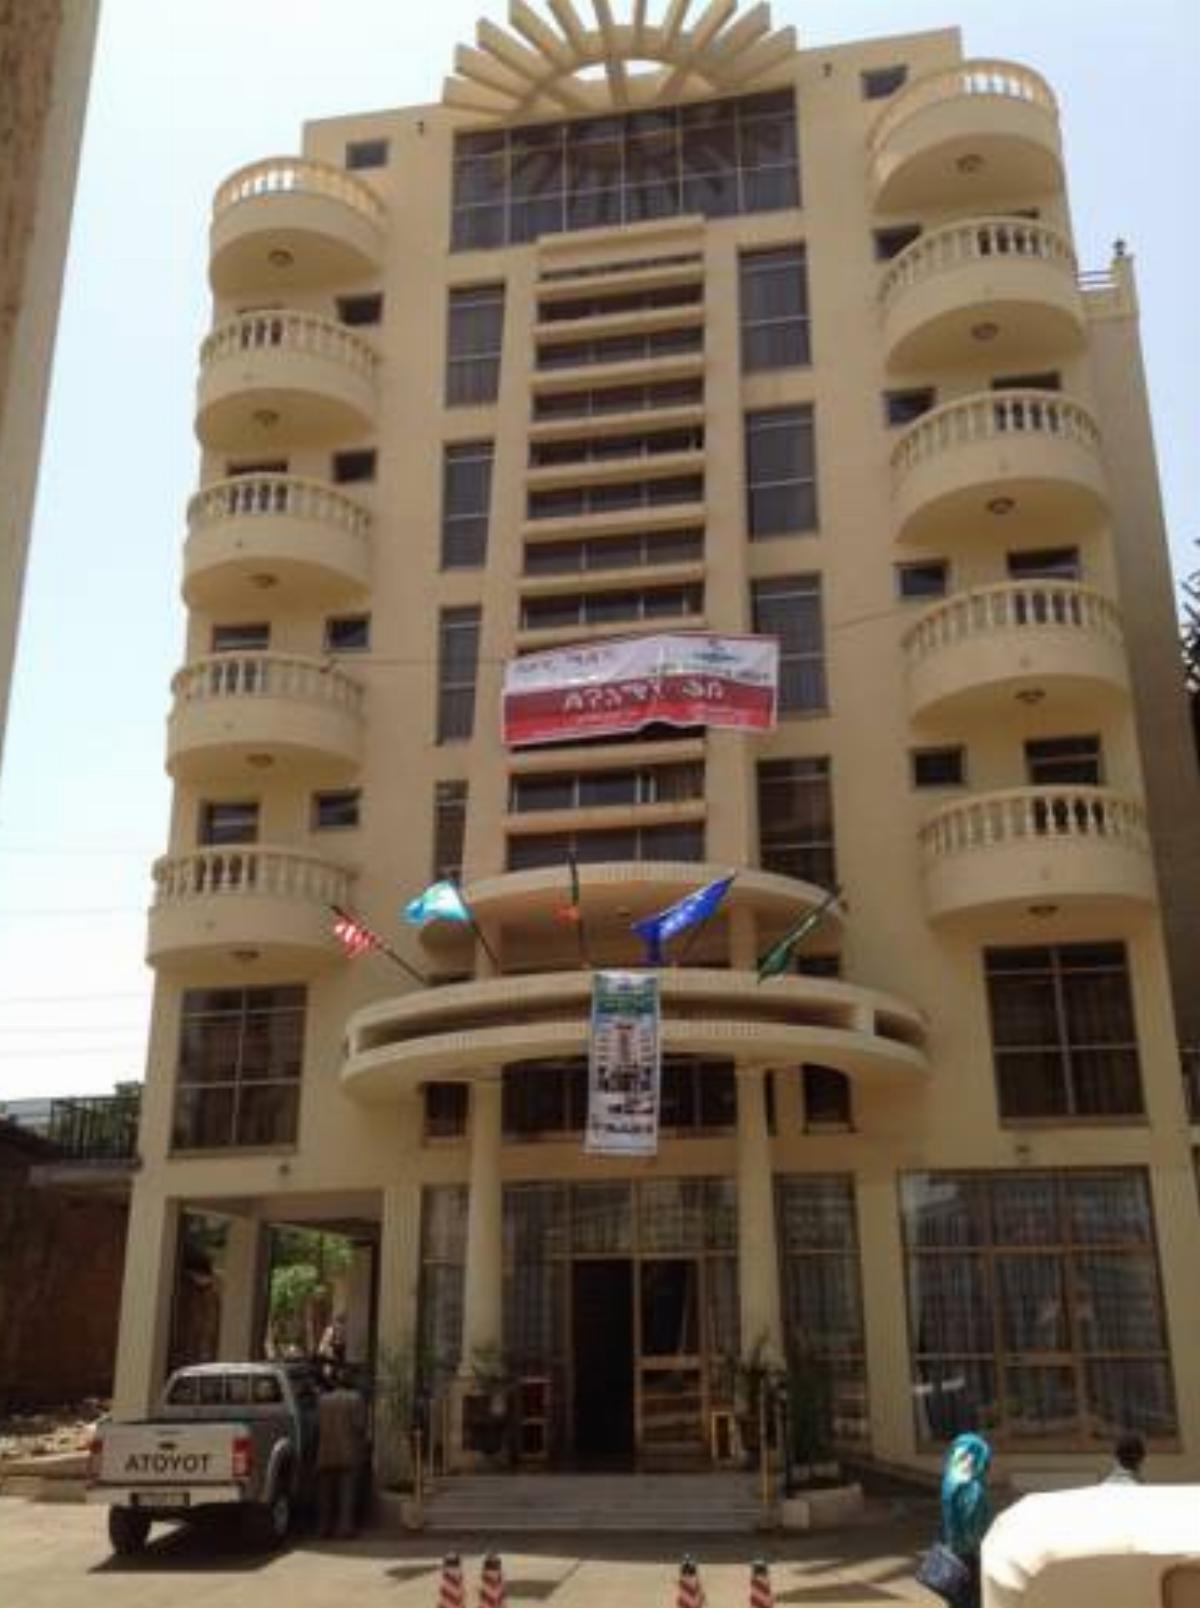 Palm Palace Hotel Hotel Bahir Dar Ethiopia